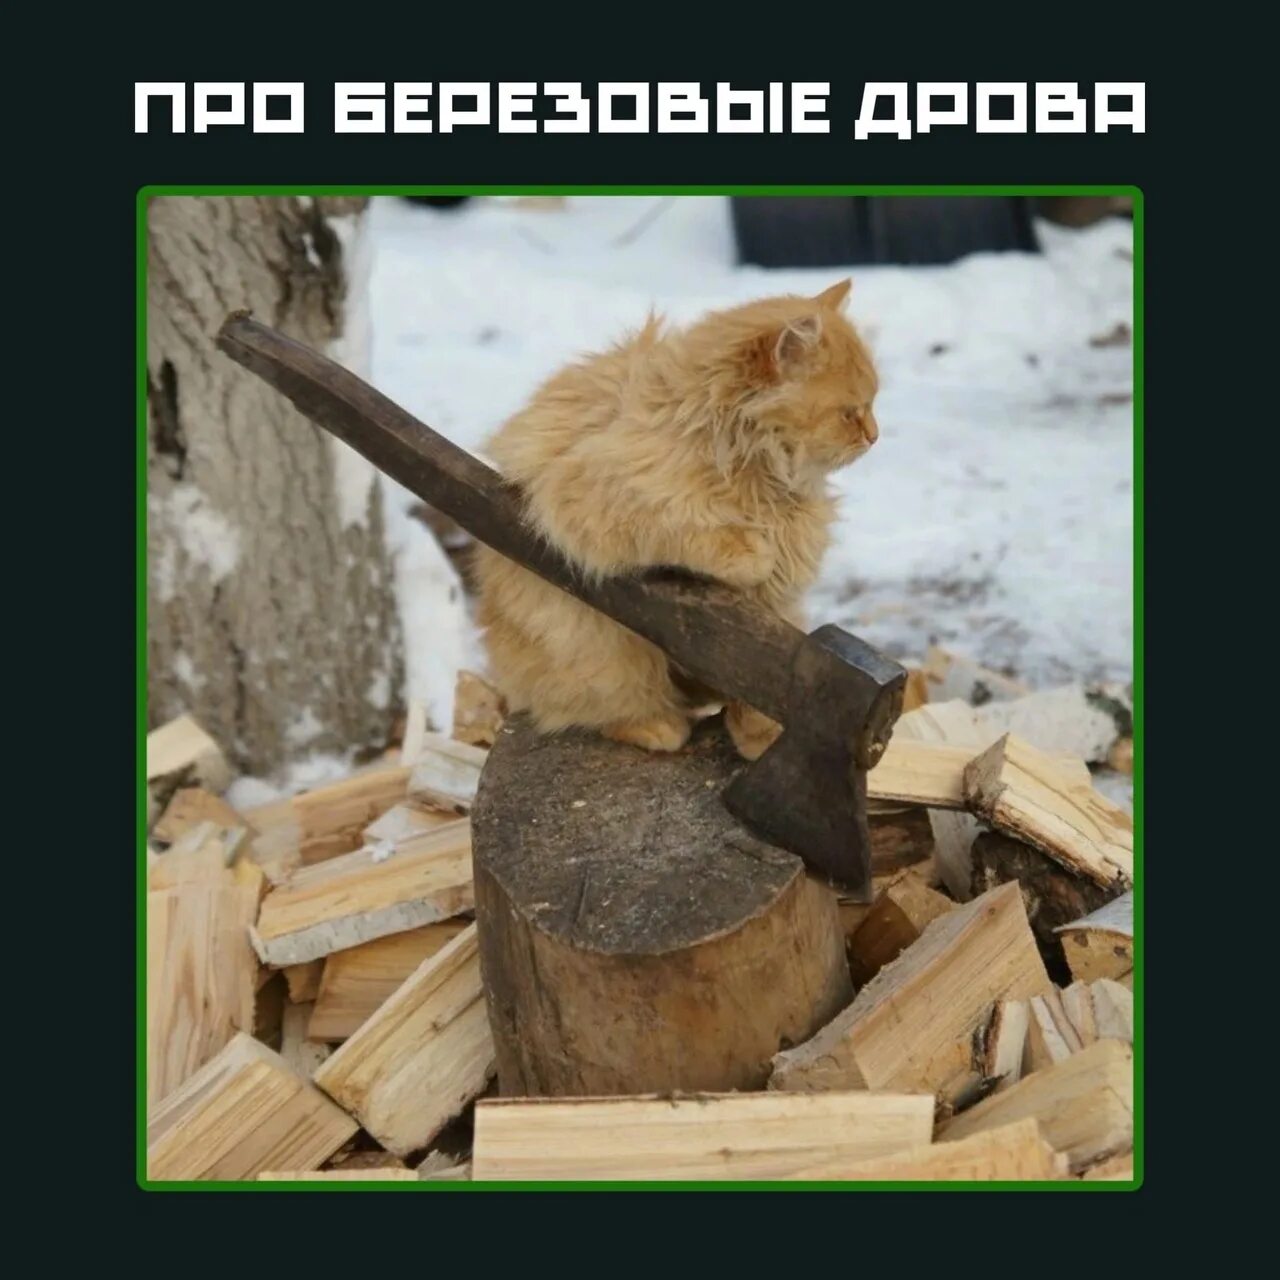 Видимо устал. Дрова приколы. Дрова прикольные картинки. Кот на дровах. Кот на картинке с дровами.